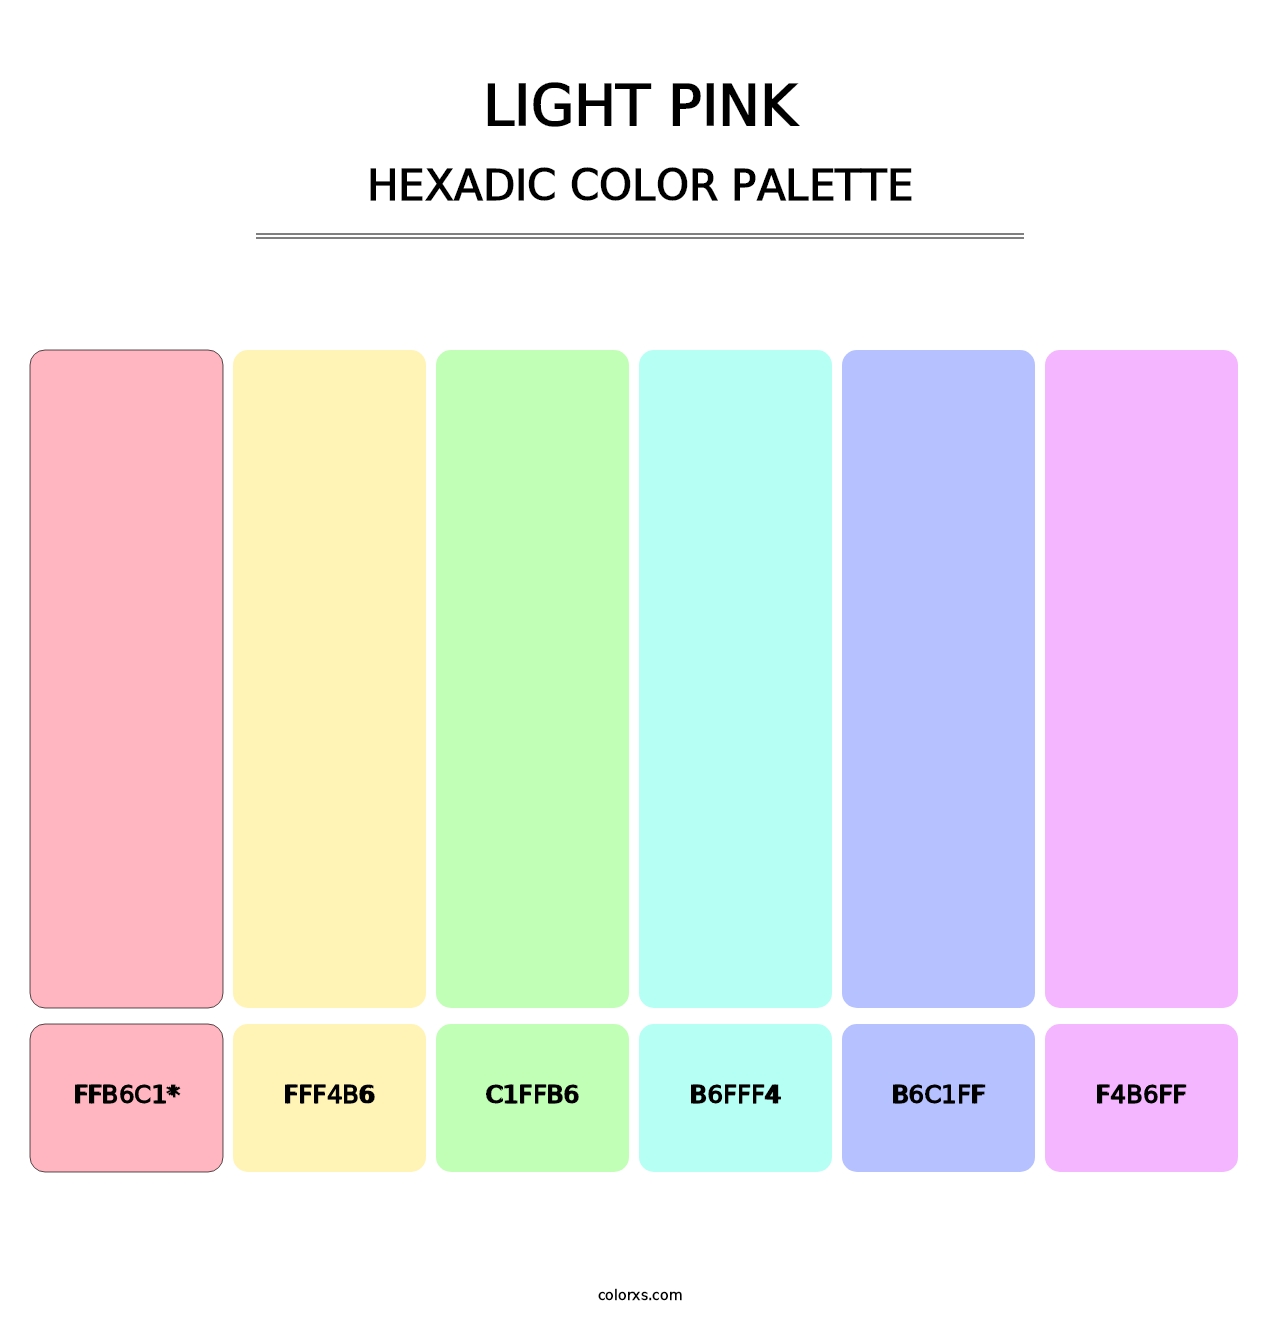 Light Pink - Hexadic Color Palette